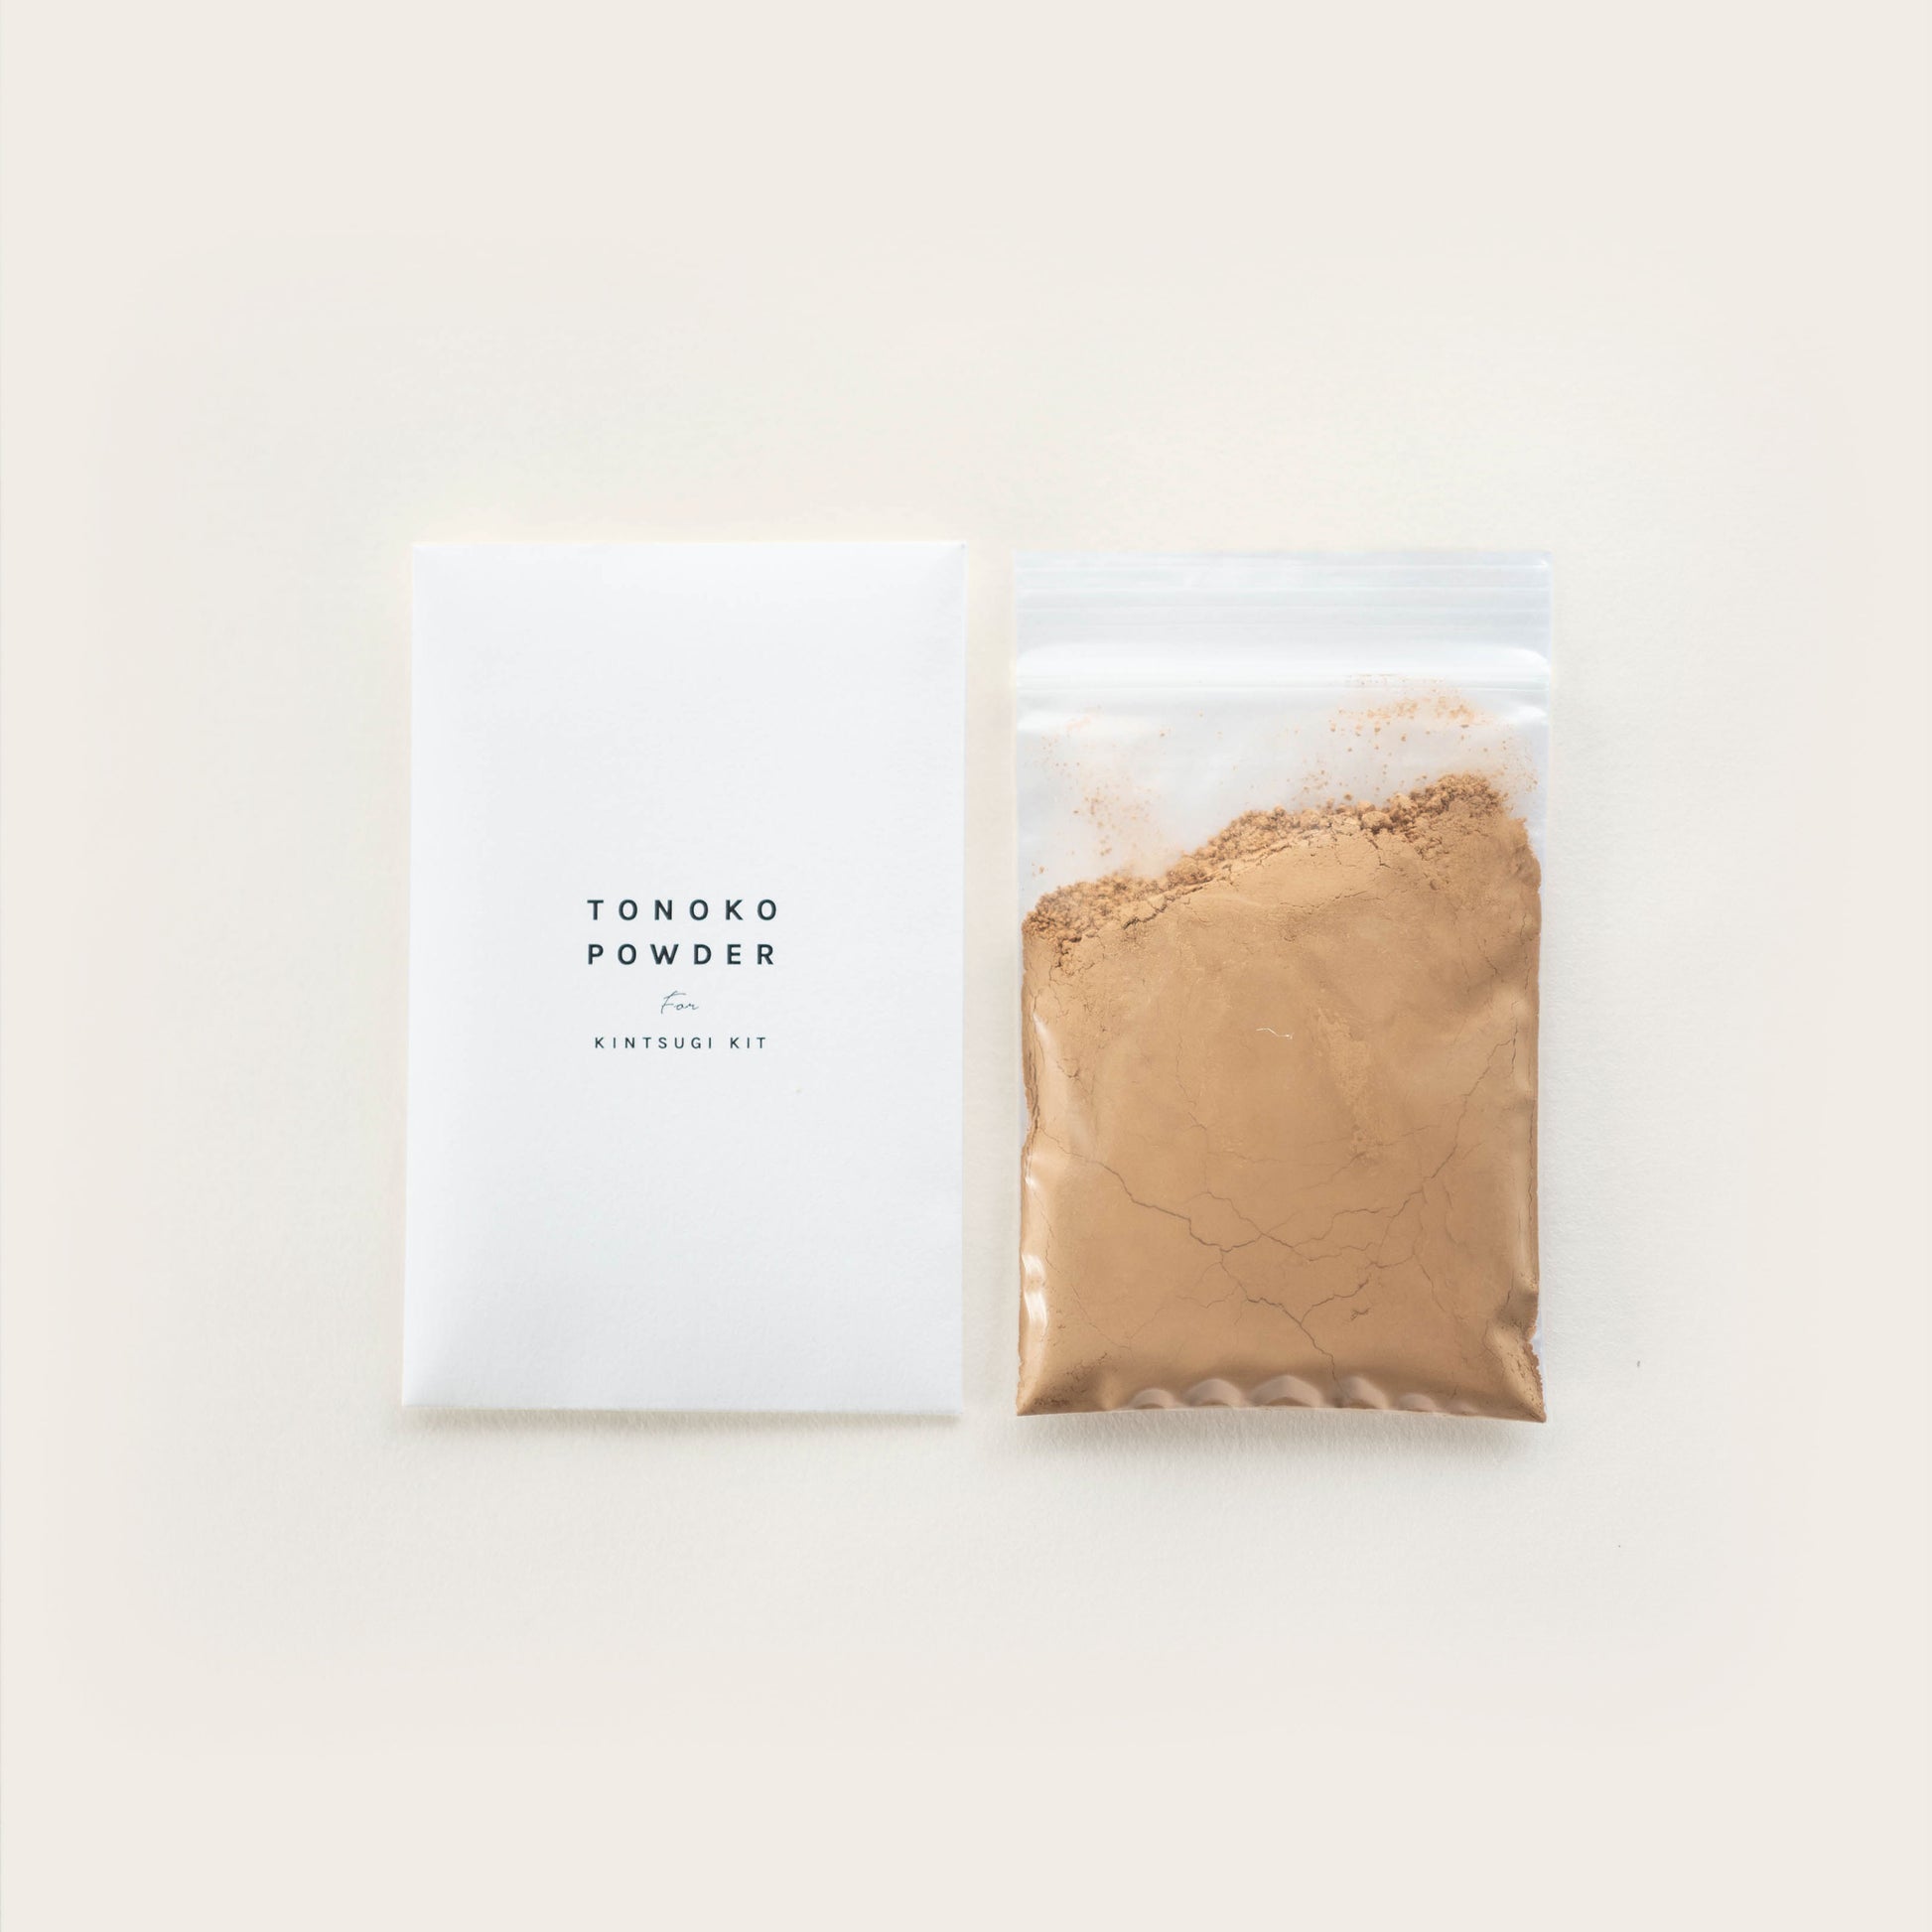 Kintsugi Kit for Starters with brass powder.